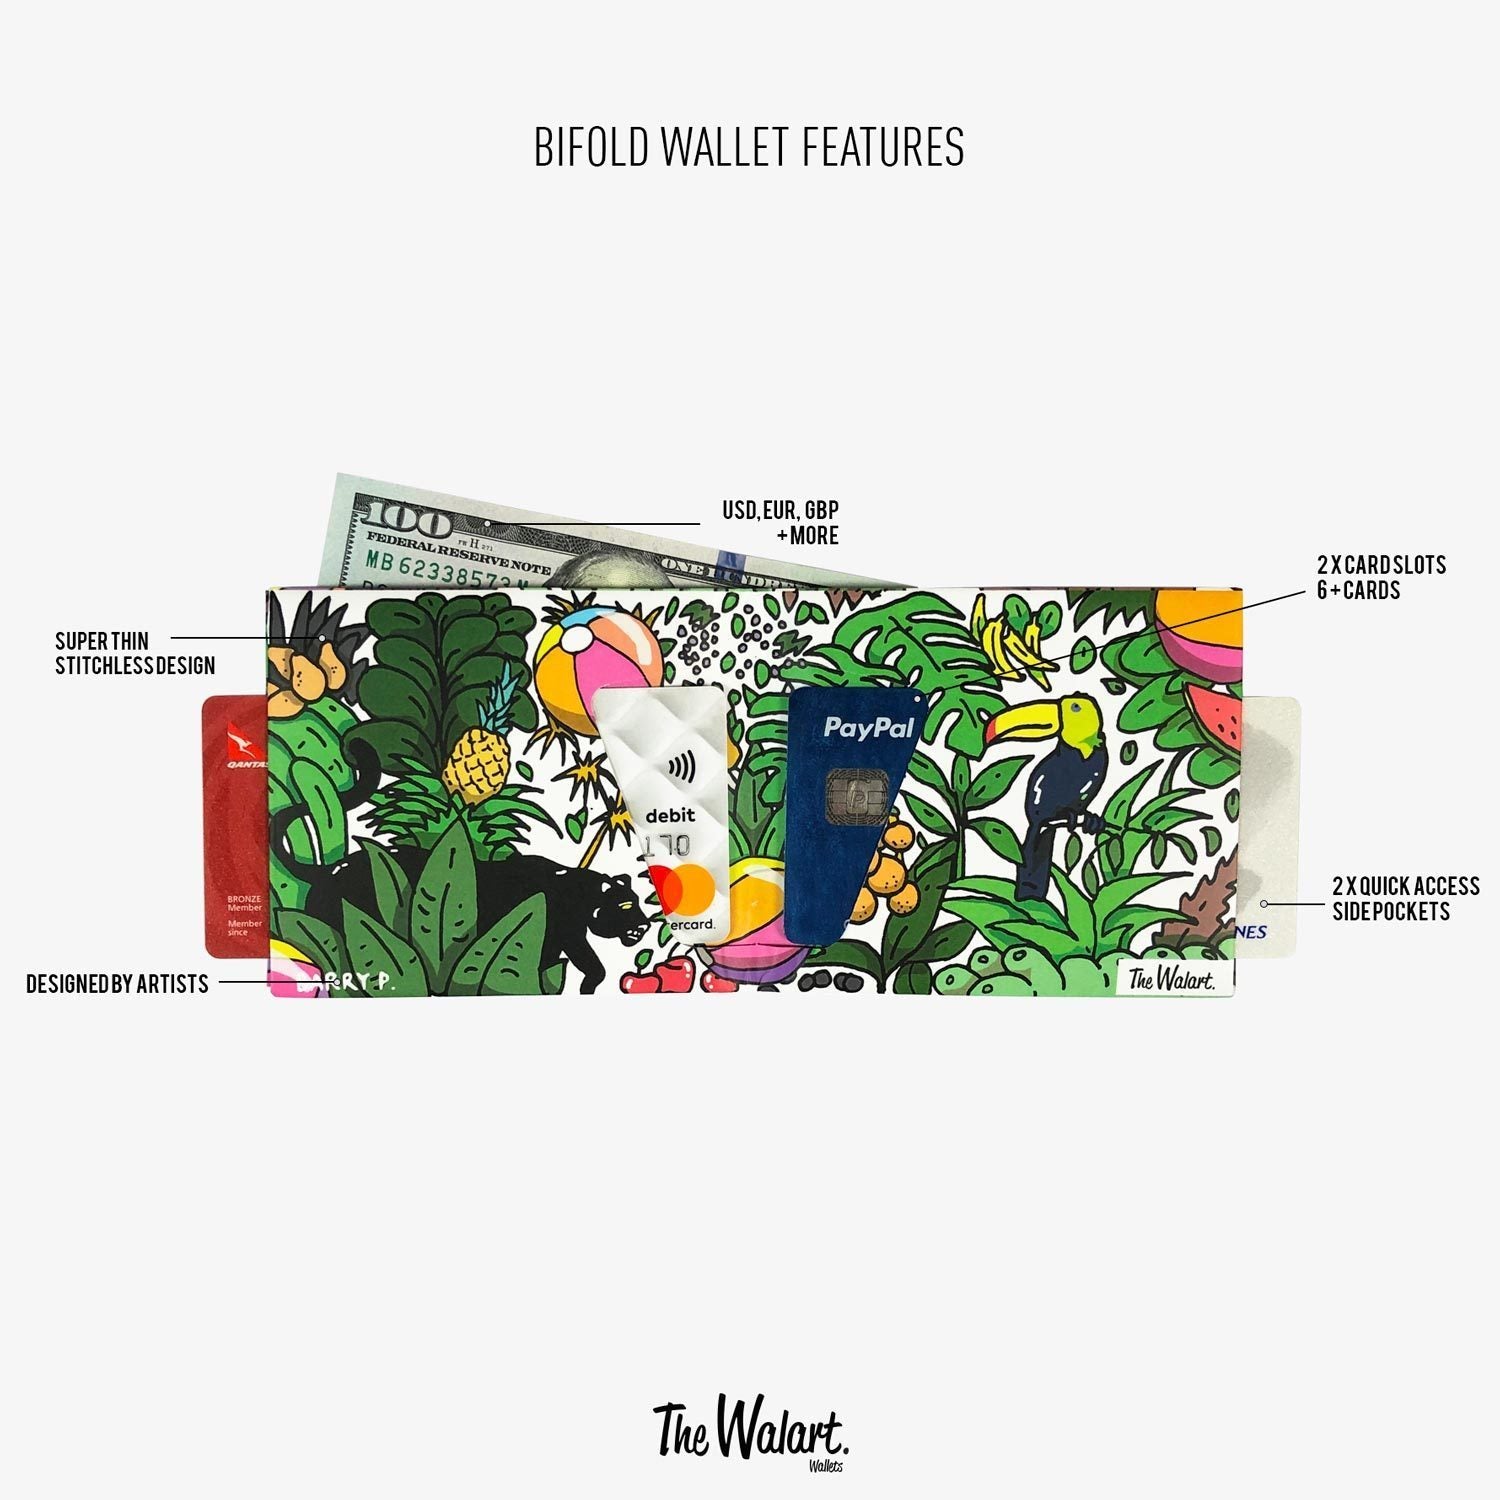 Miami Vice Bifold Wallet